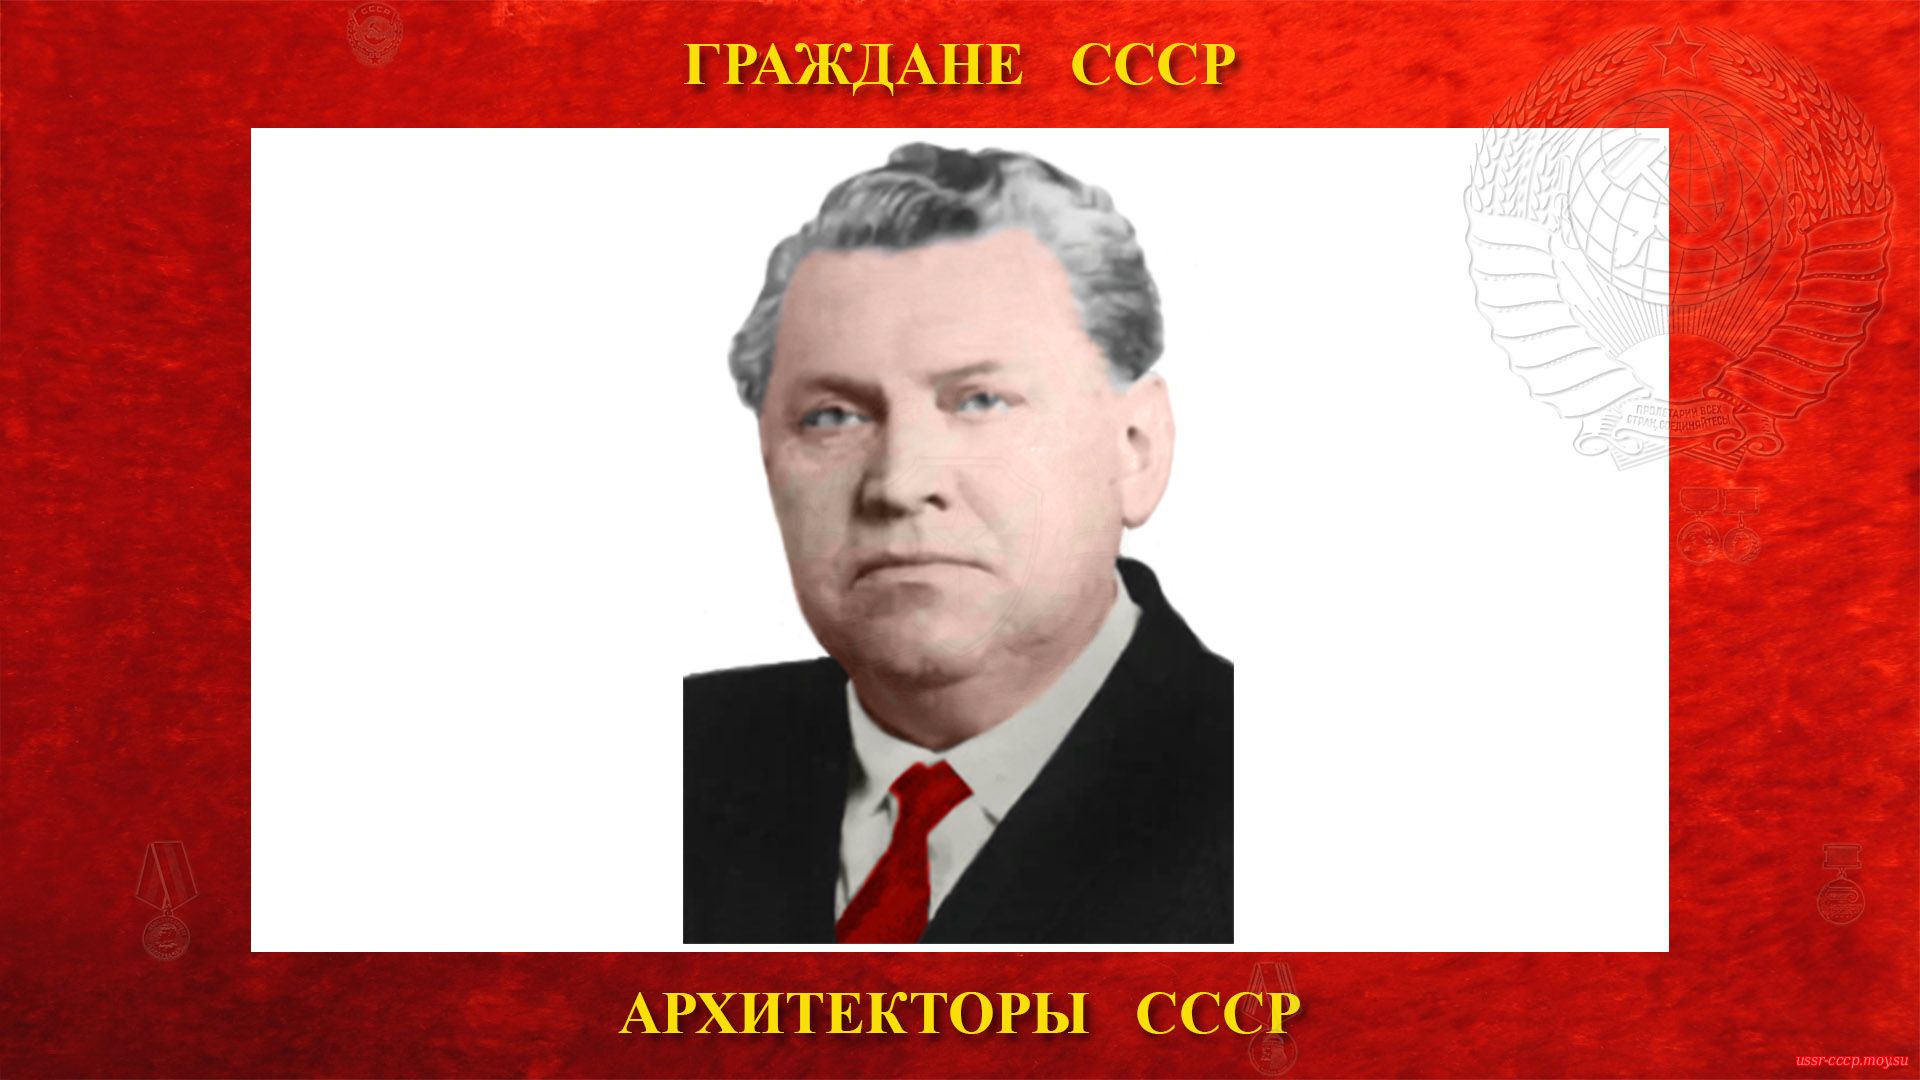 Мезенцев Борис Сергеевич (биография)